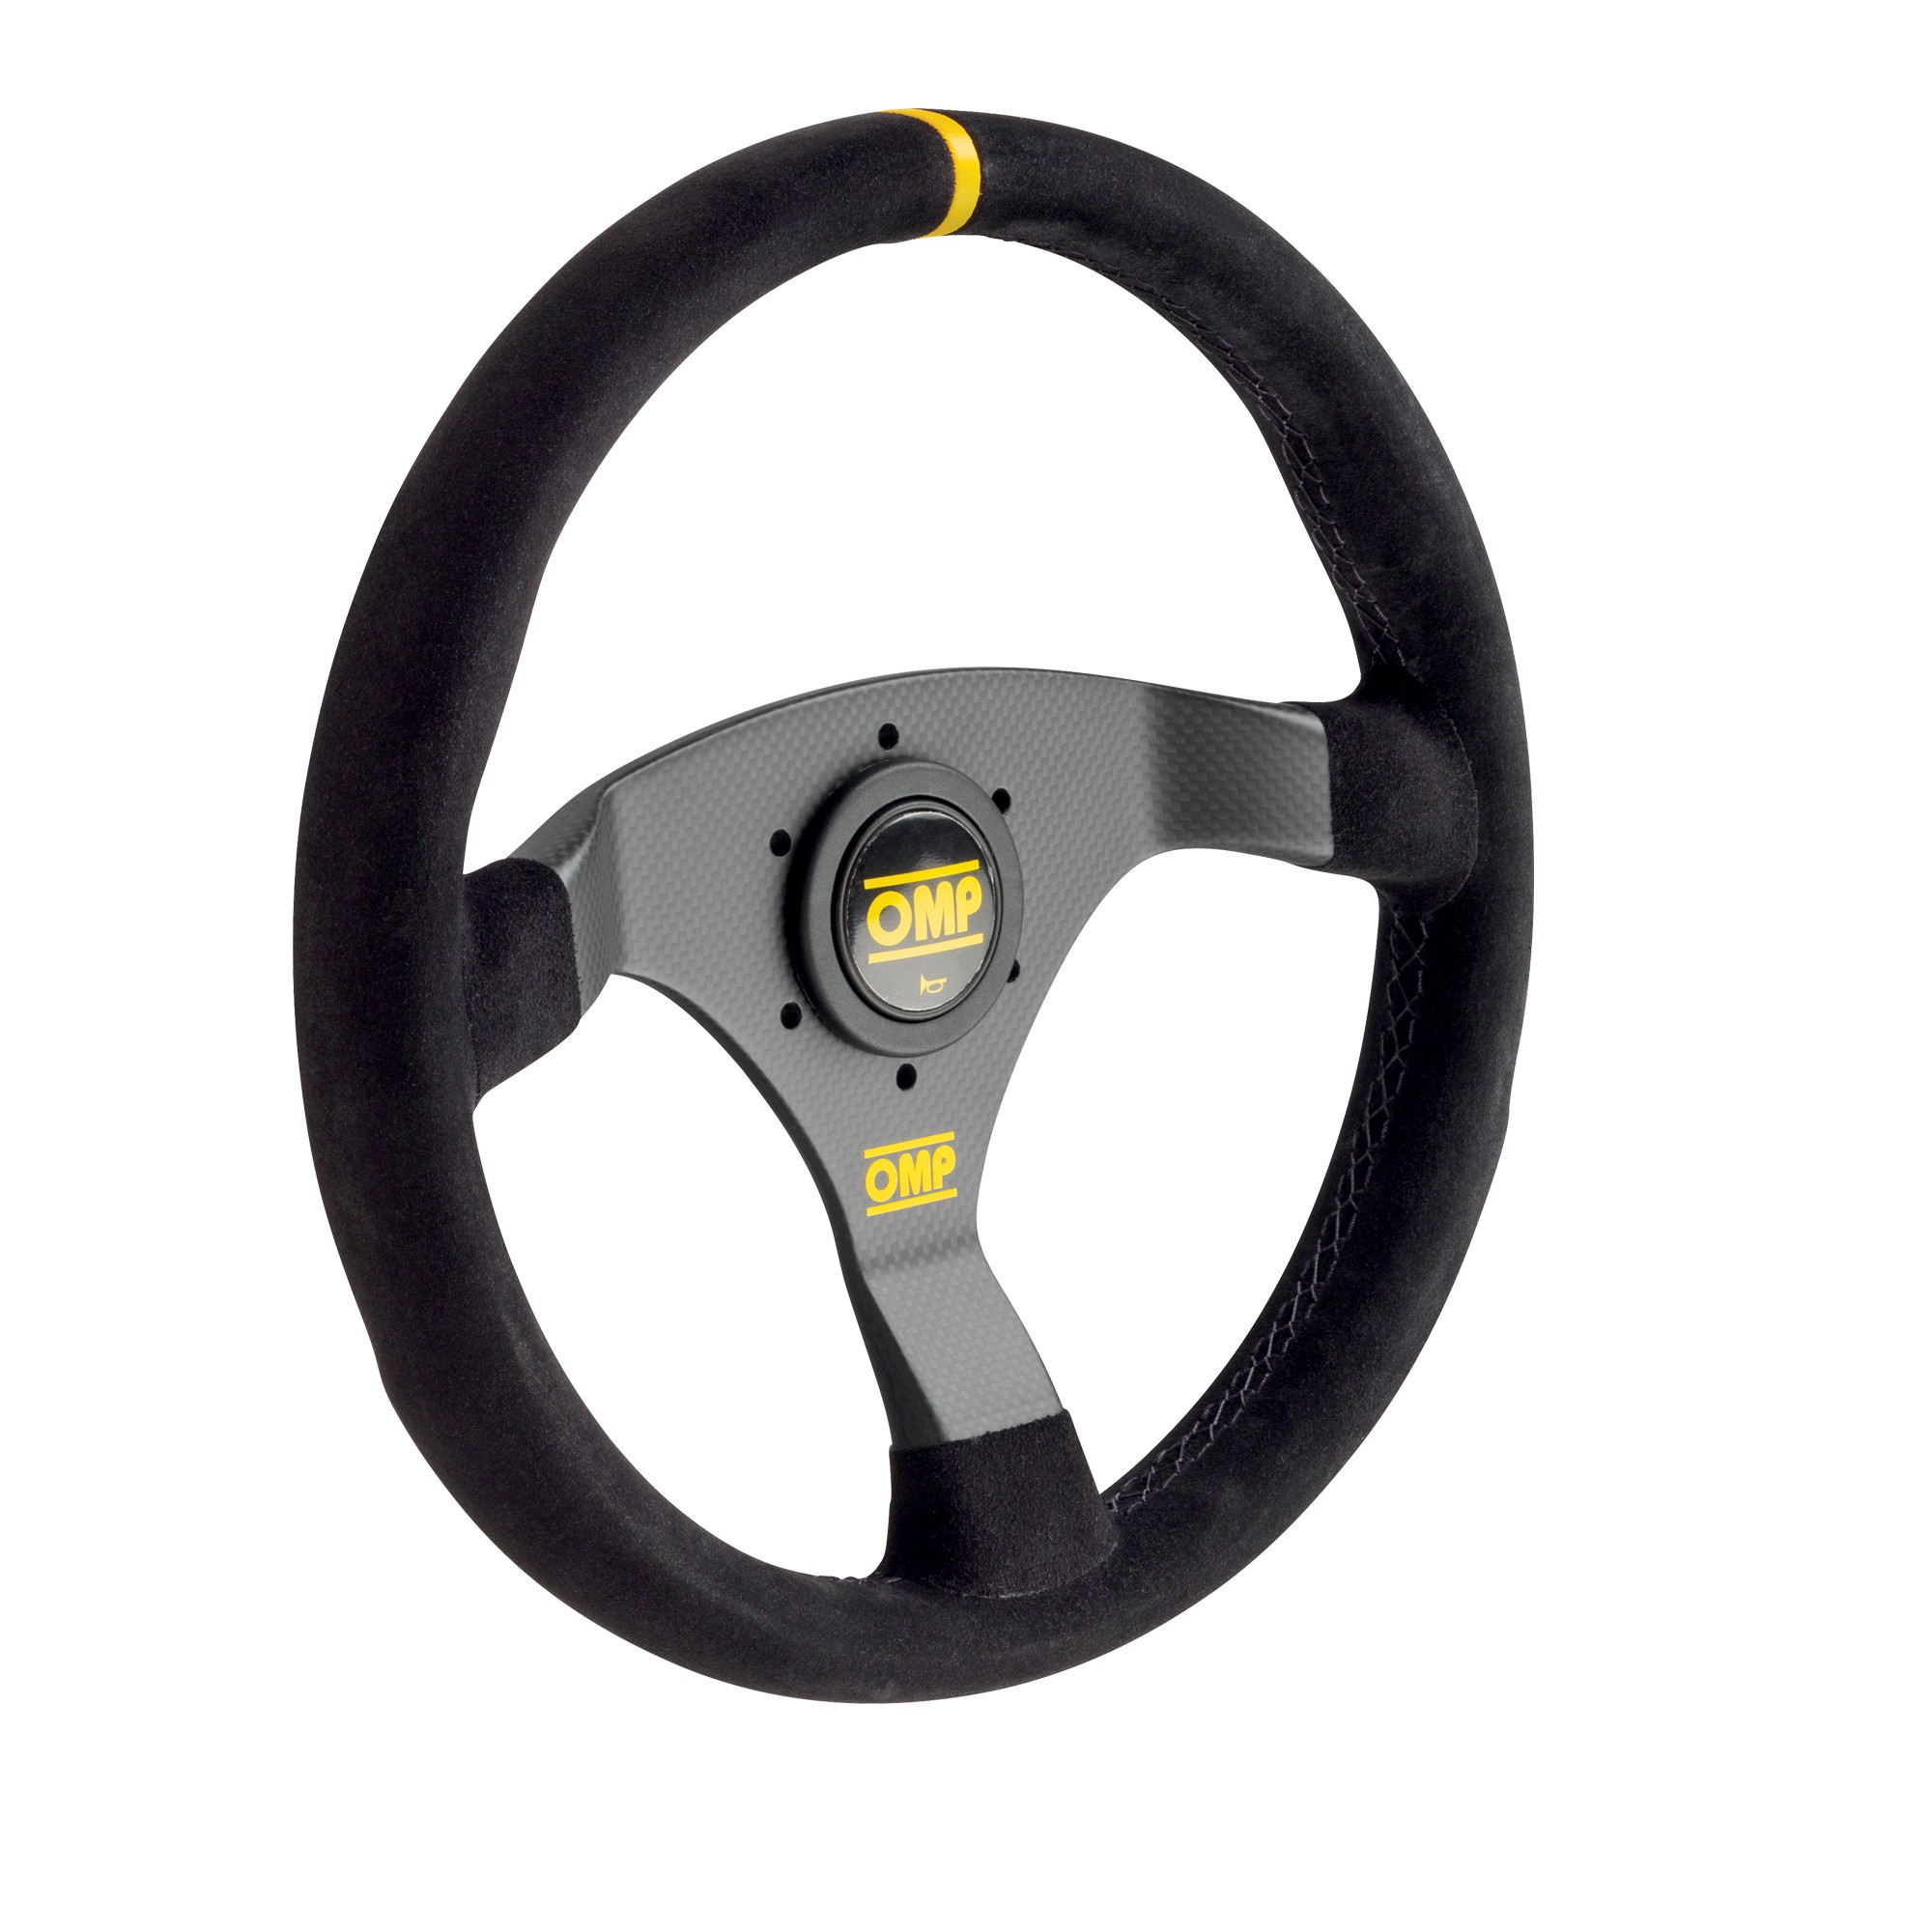 Carbon racing steering wheel - 320 CARBON S